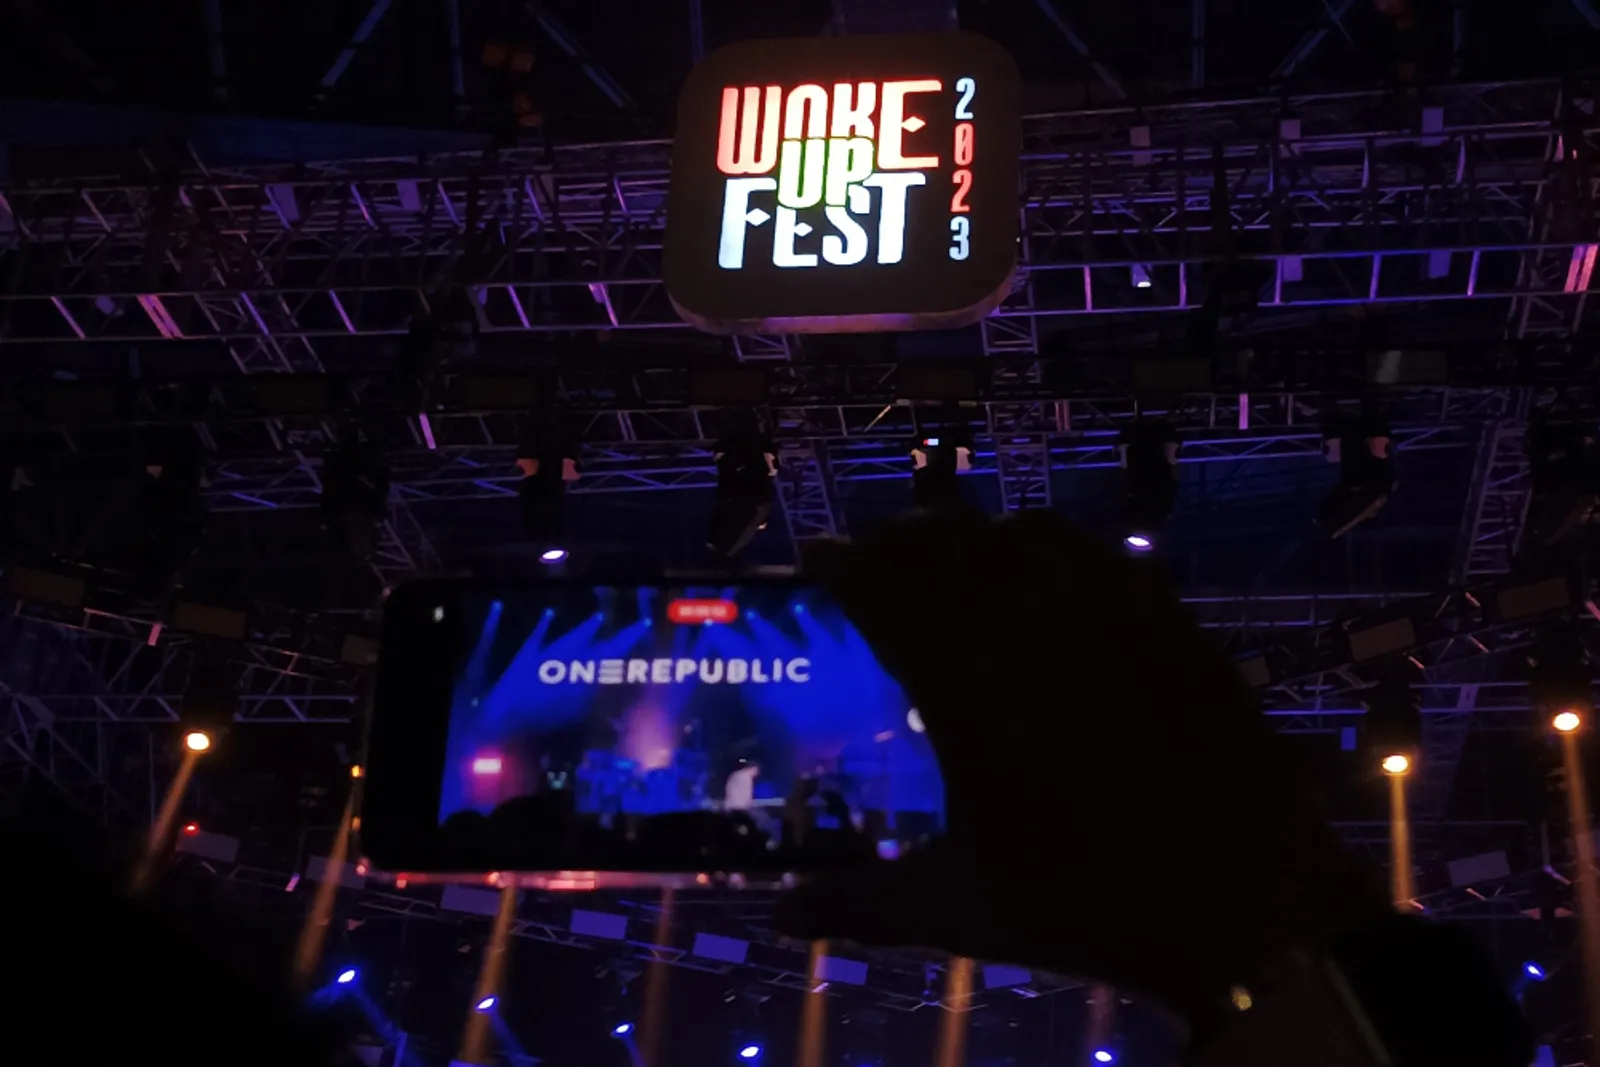 Woke Up Fest 2023: Halo, Post-Concert Disease!